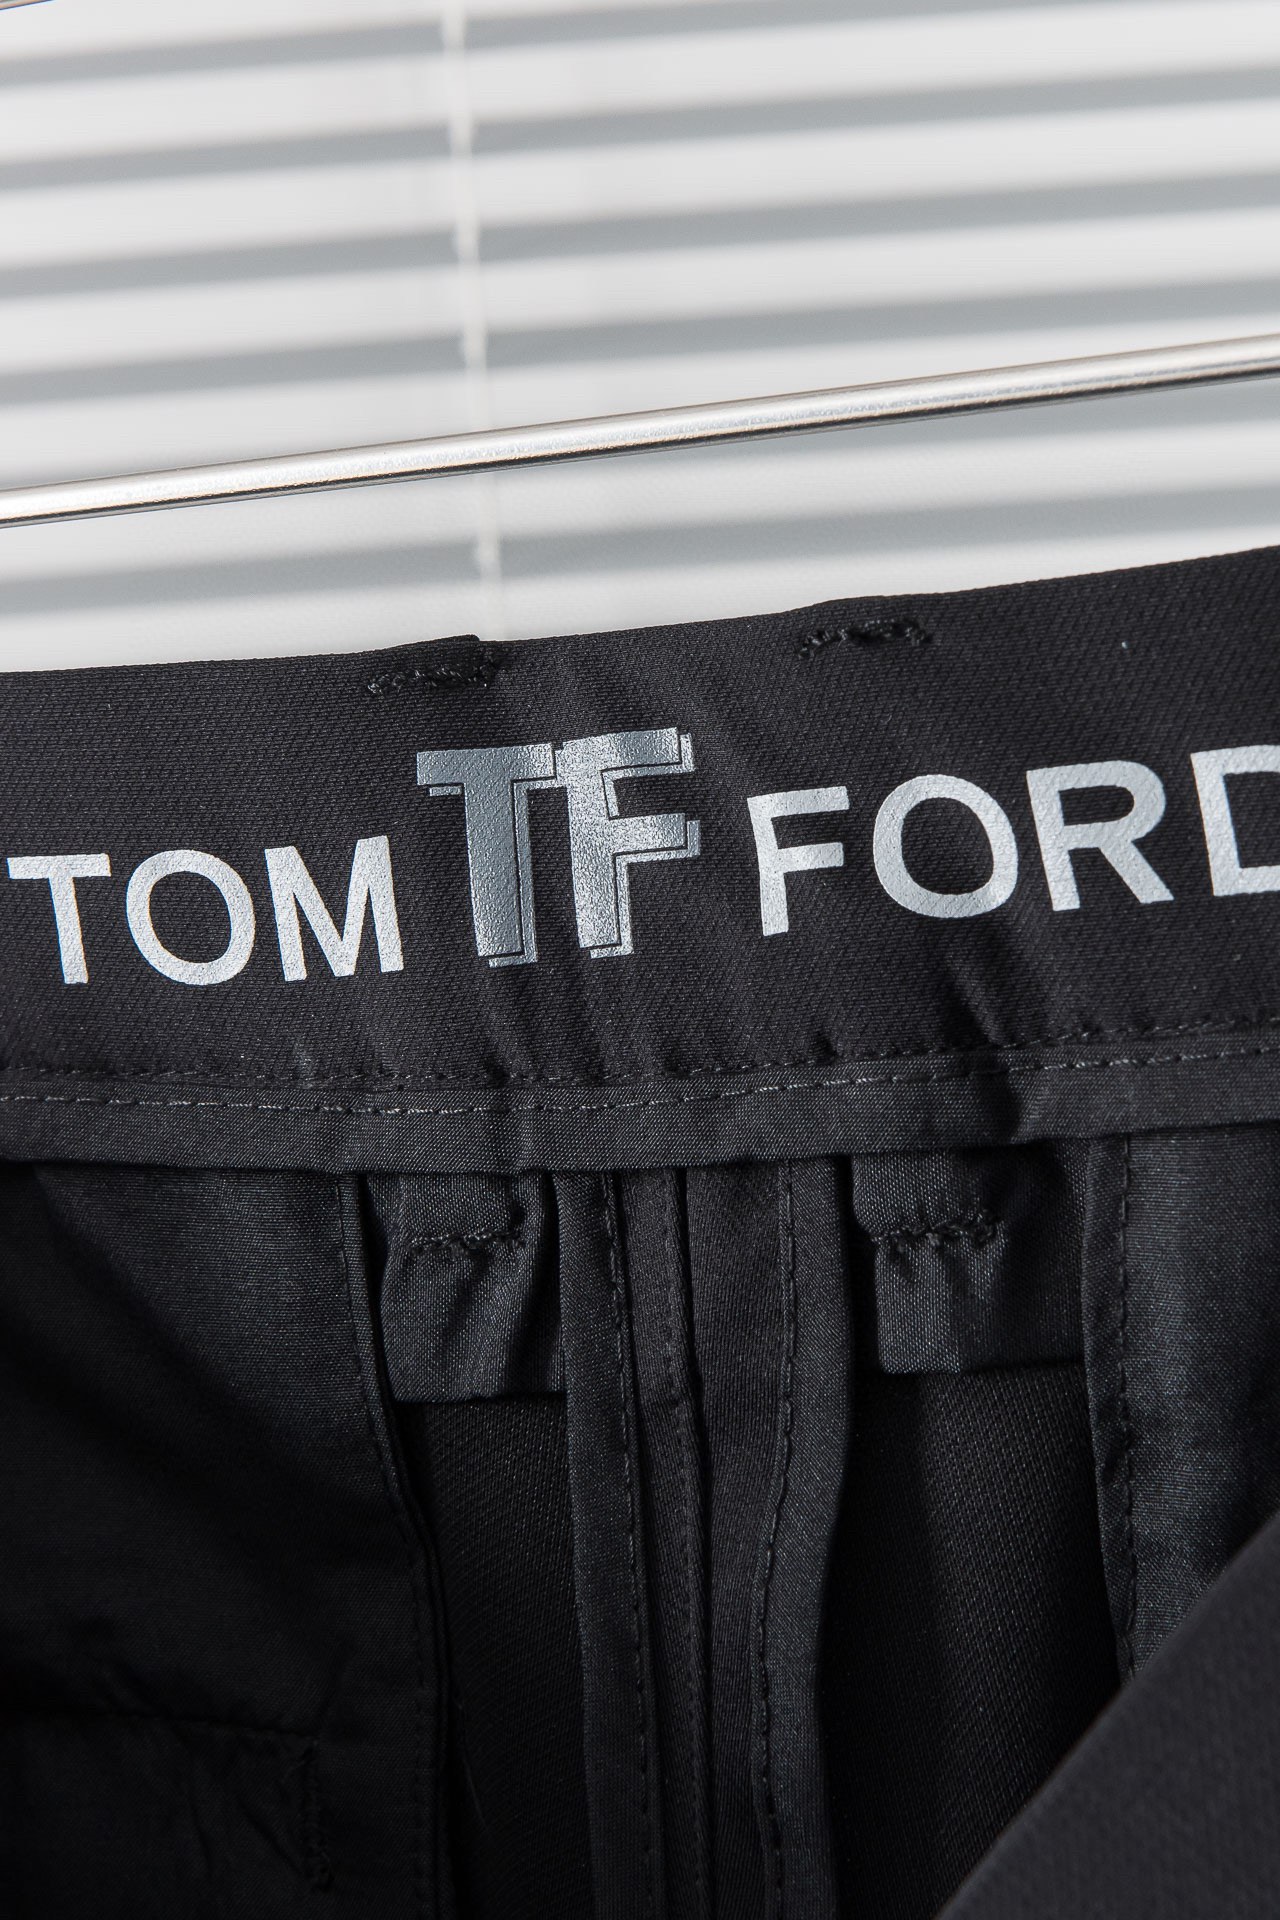 New#TF*轻奢时尚定制休闲西裤简洁干练的风格精致卓越的品质男装每款的设计点跟舒适度都能做到平衡刚刚上